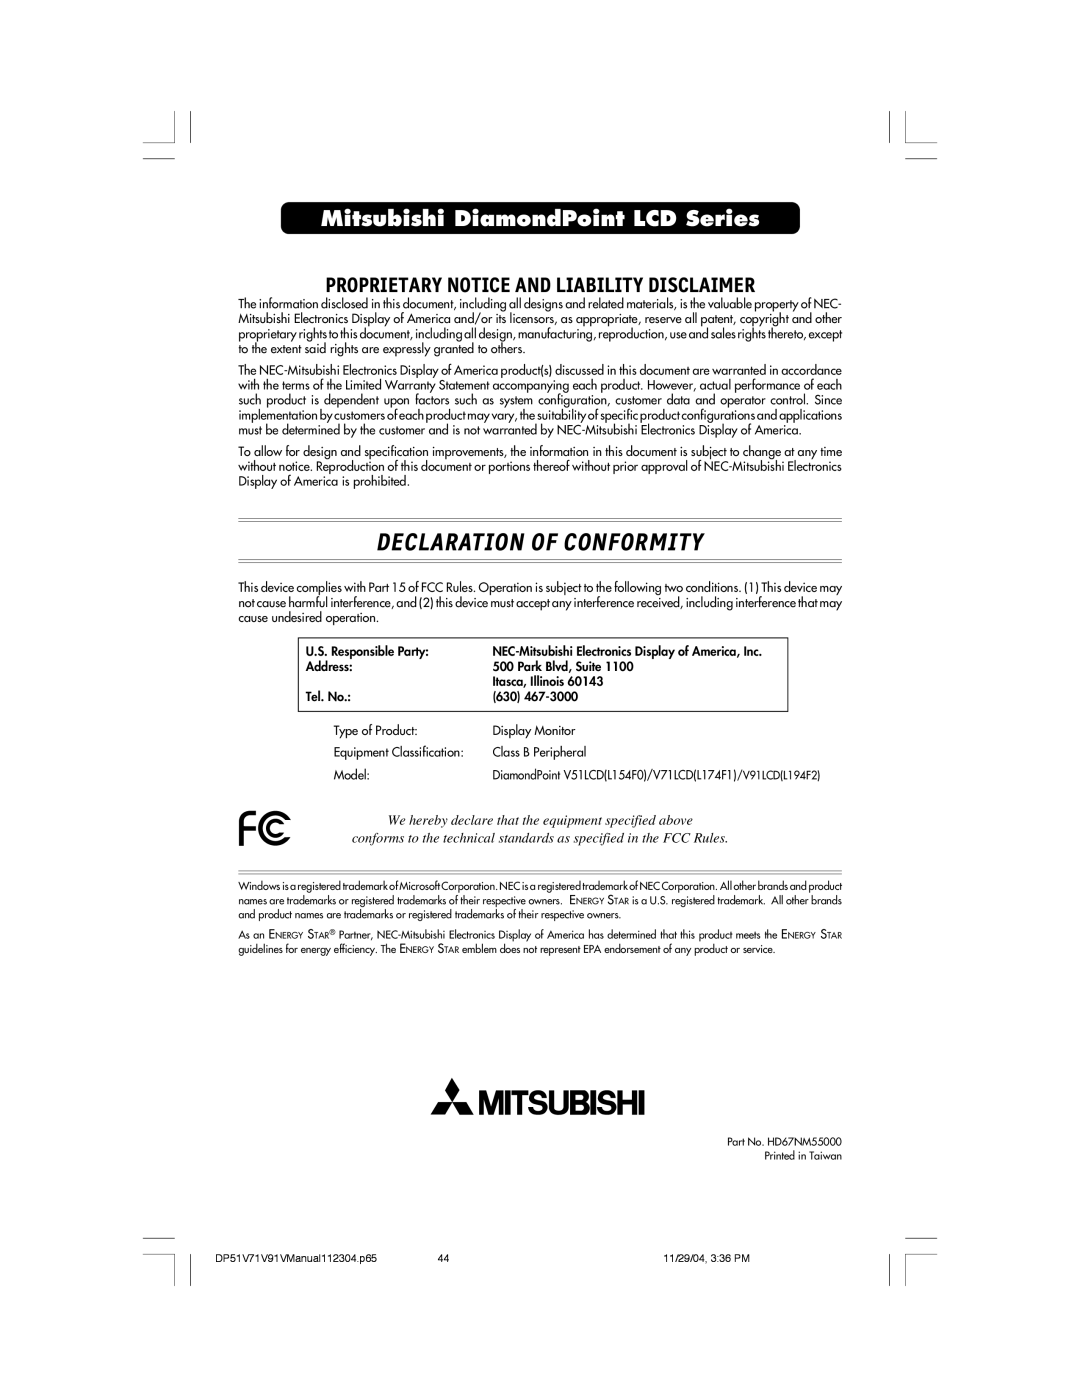 Mitsubishi Electronics V71LCD, V91LCD, V51LCD manual Declaration Of Conformity, Mitsubishi DiamondPoint LCD Series 